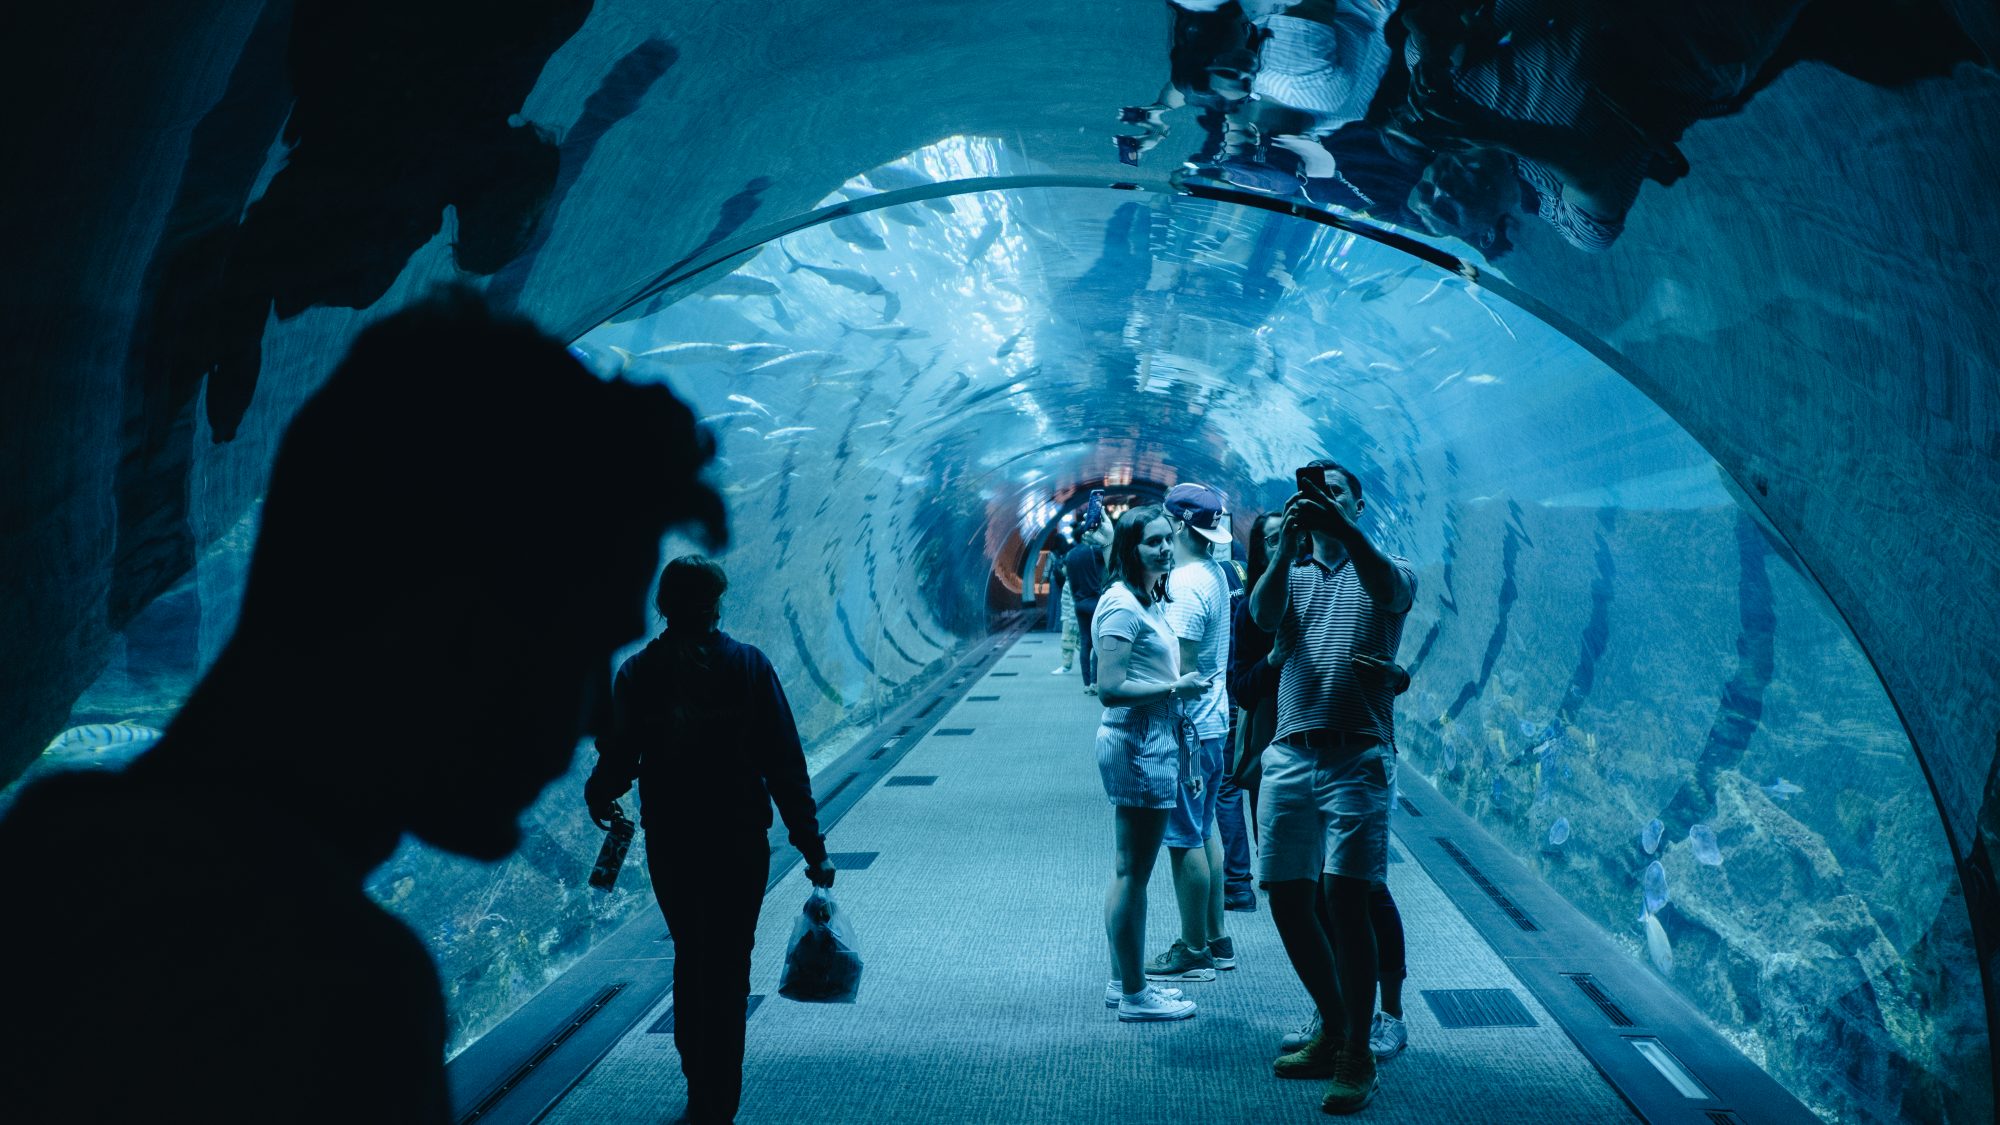 Le tunnel de l'aquarium - Dubaï Mall